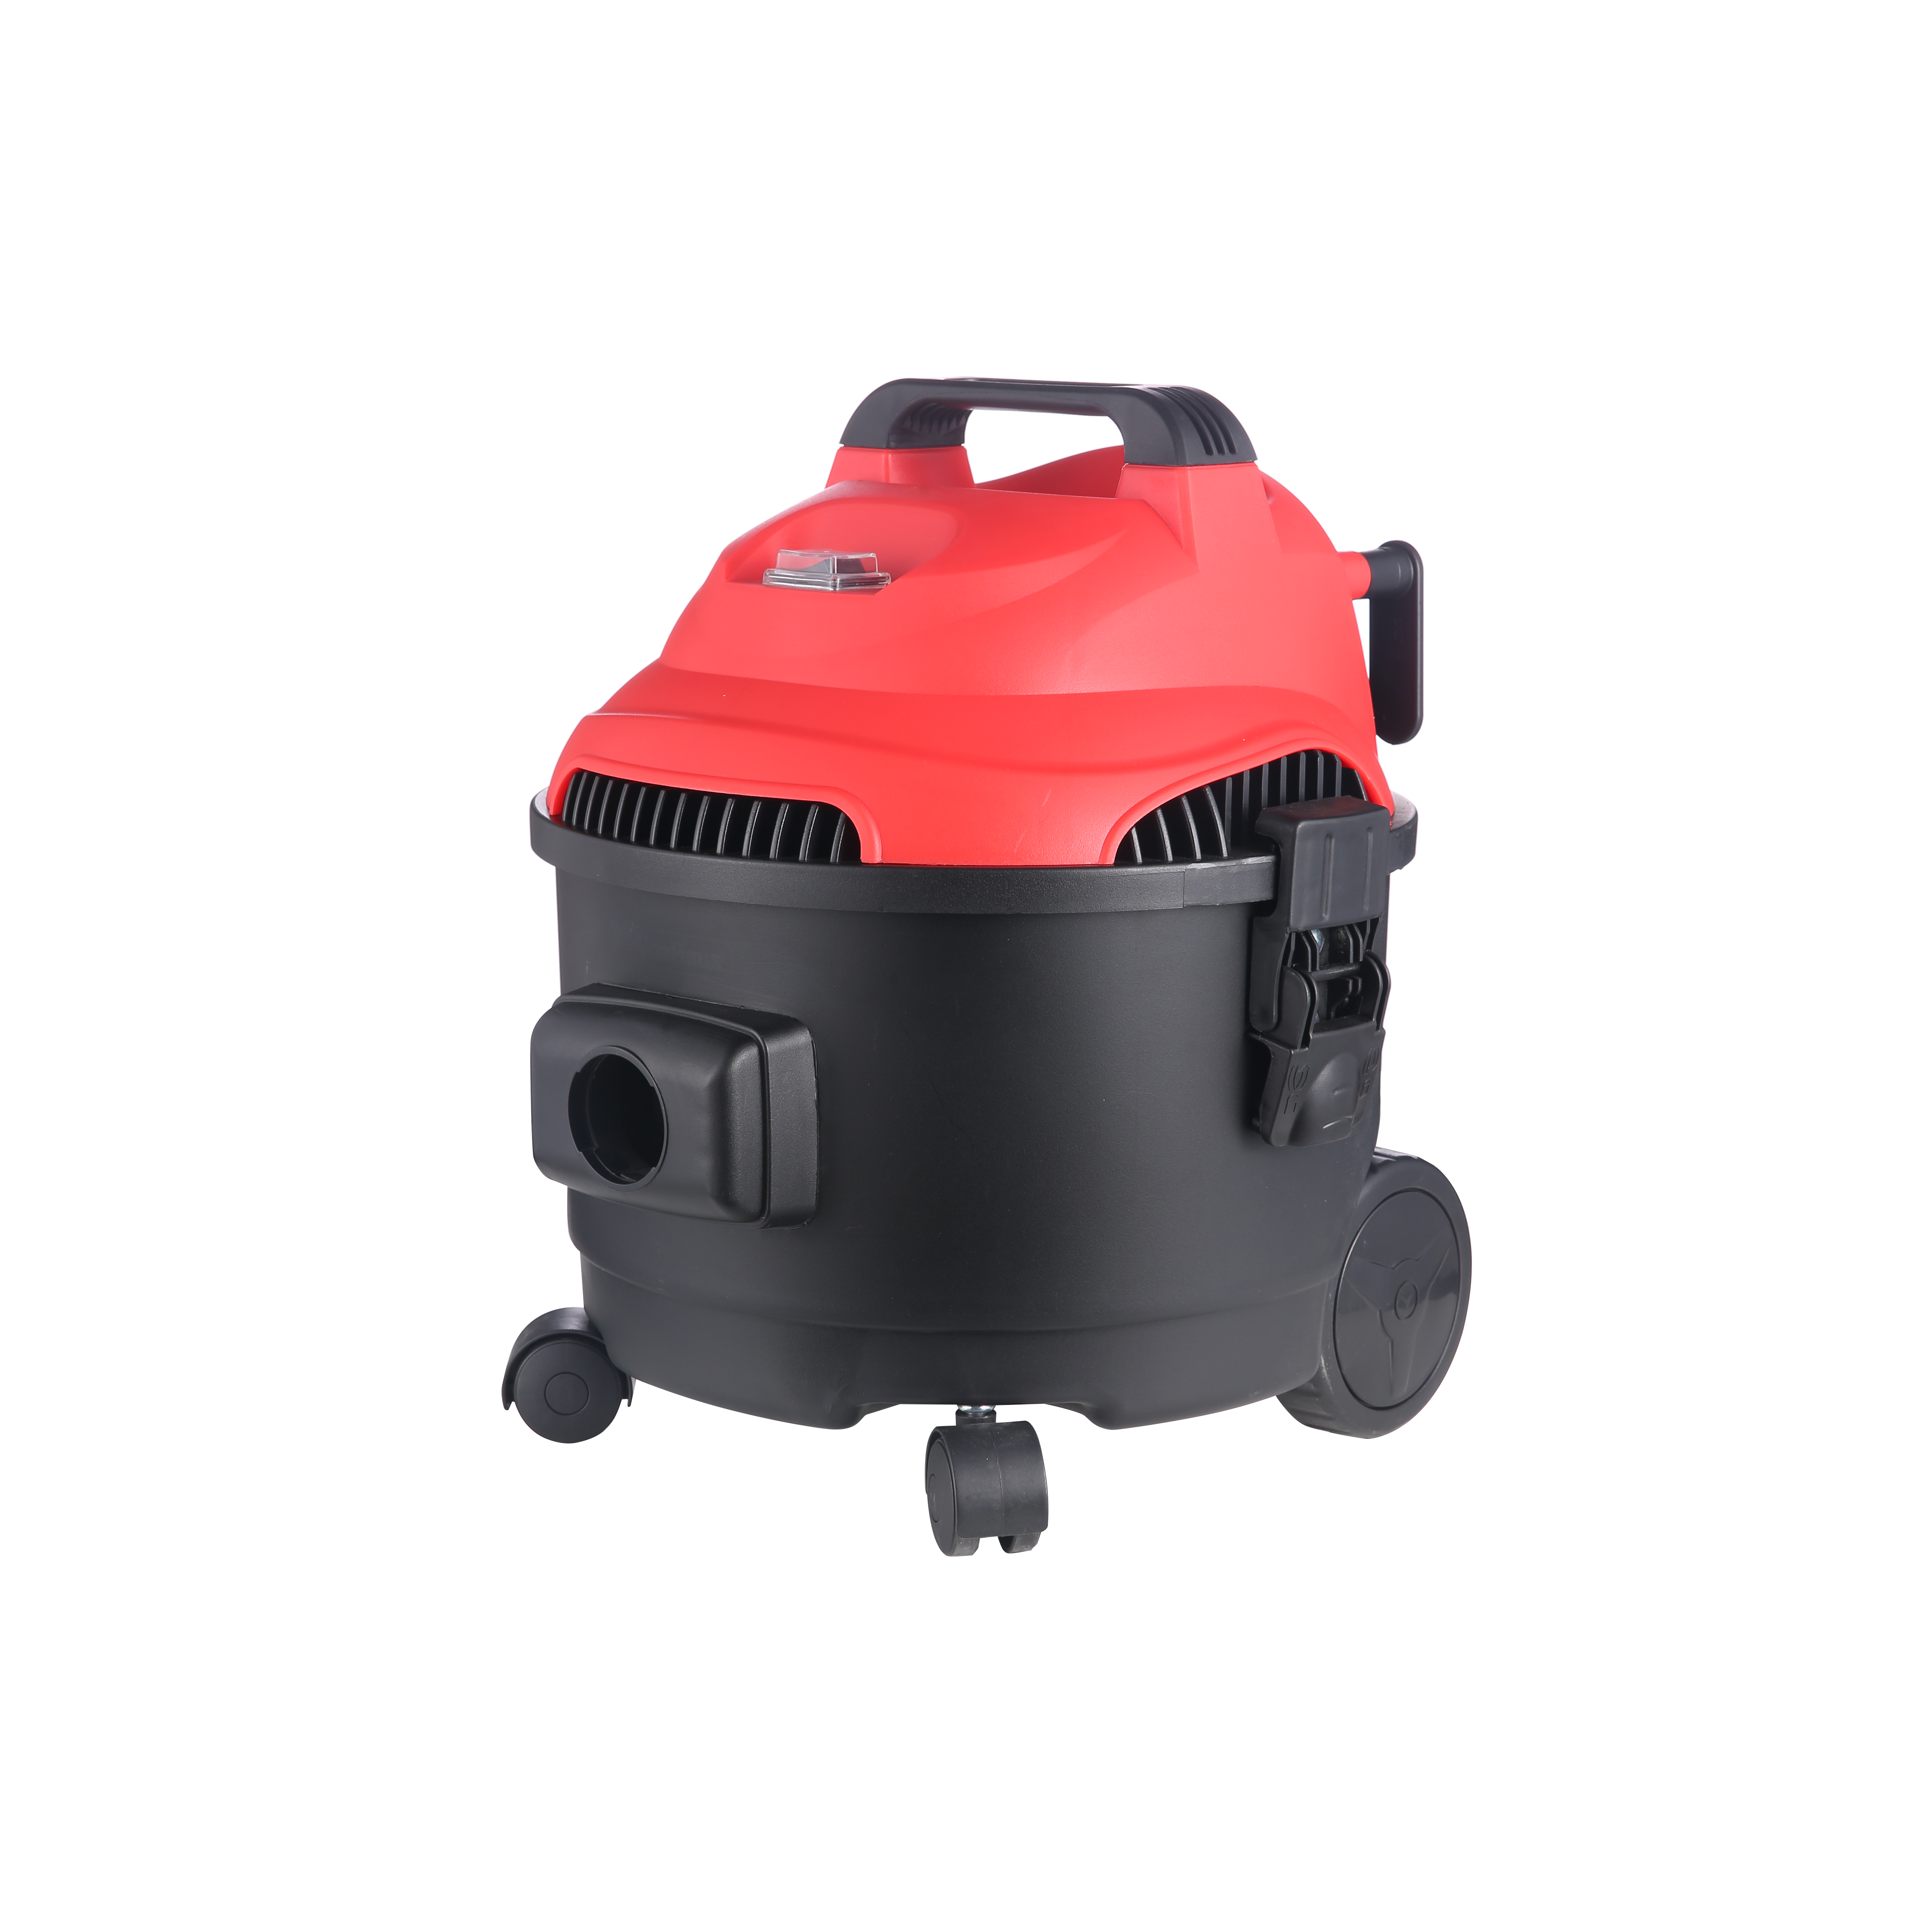 RL128 1600W professional mop vacuum cleaner